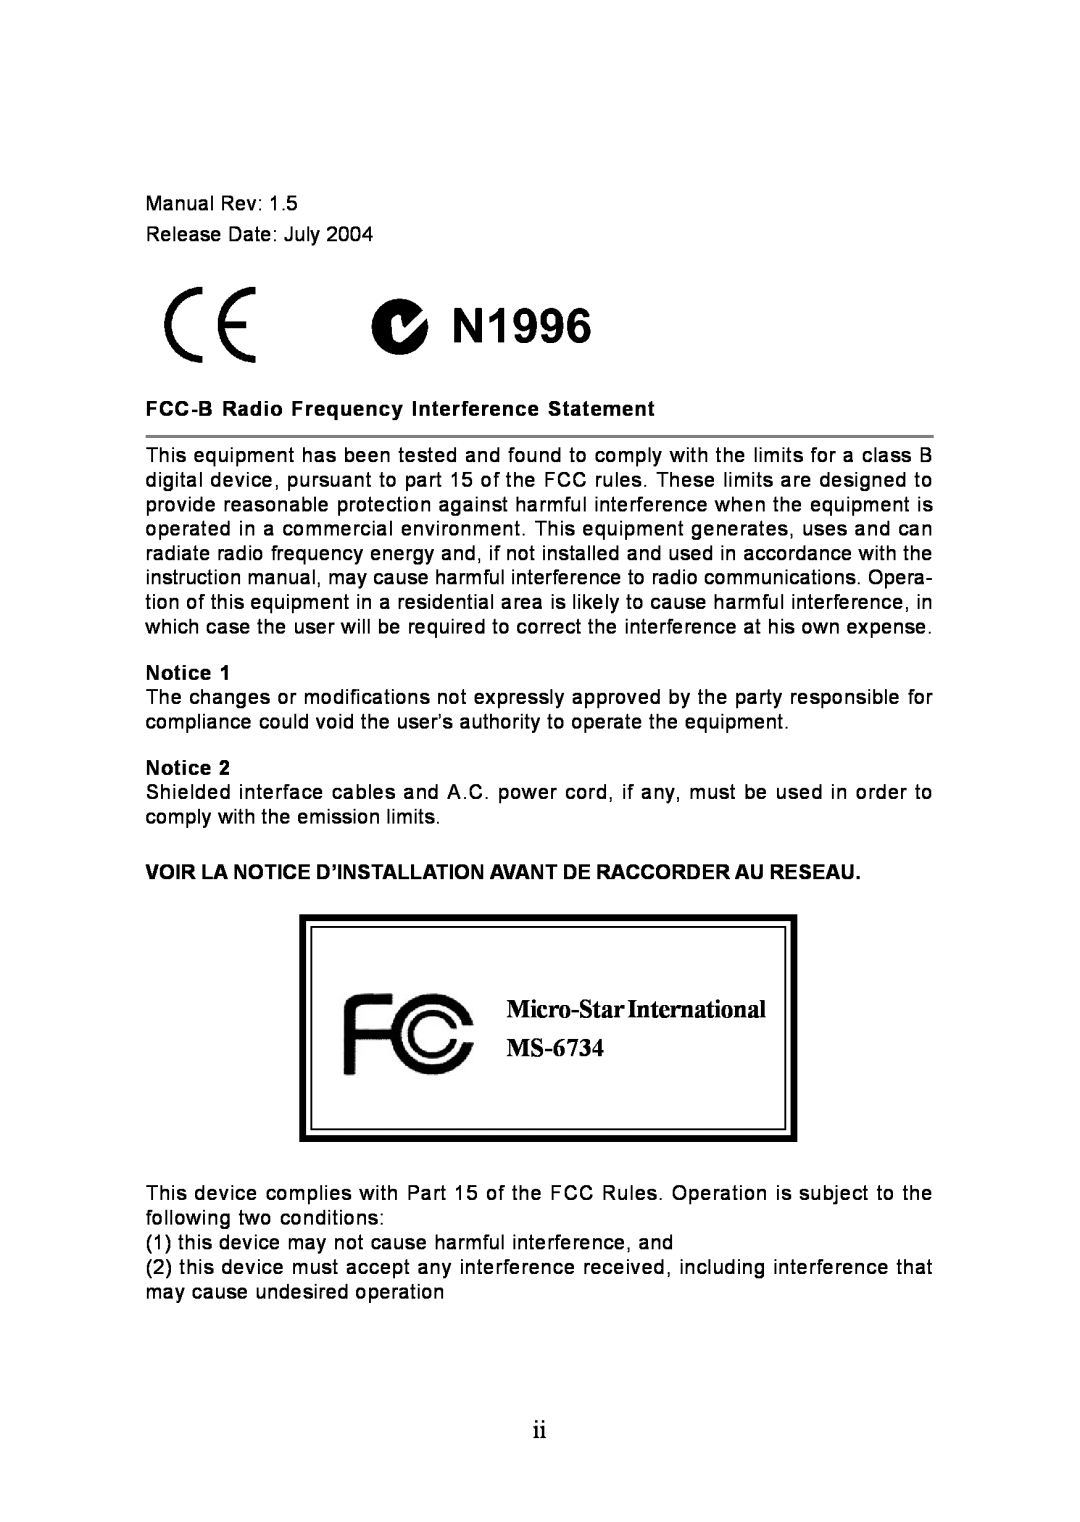 Intel KM4M, KM4AM, G52-M6734XD manual Micro-Star International MS-6734, FCC-B Radio Frequency Interference Statement 